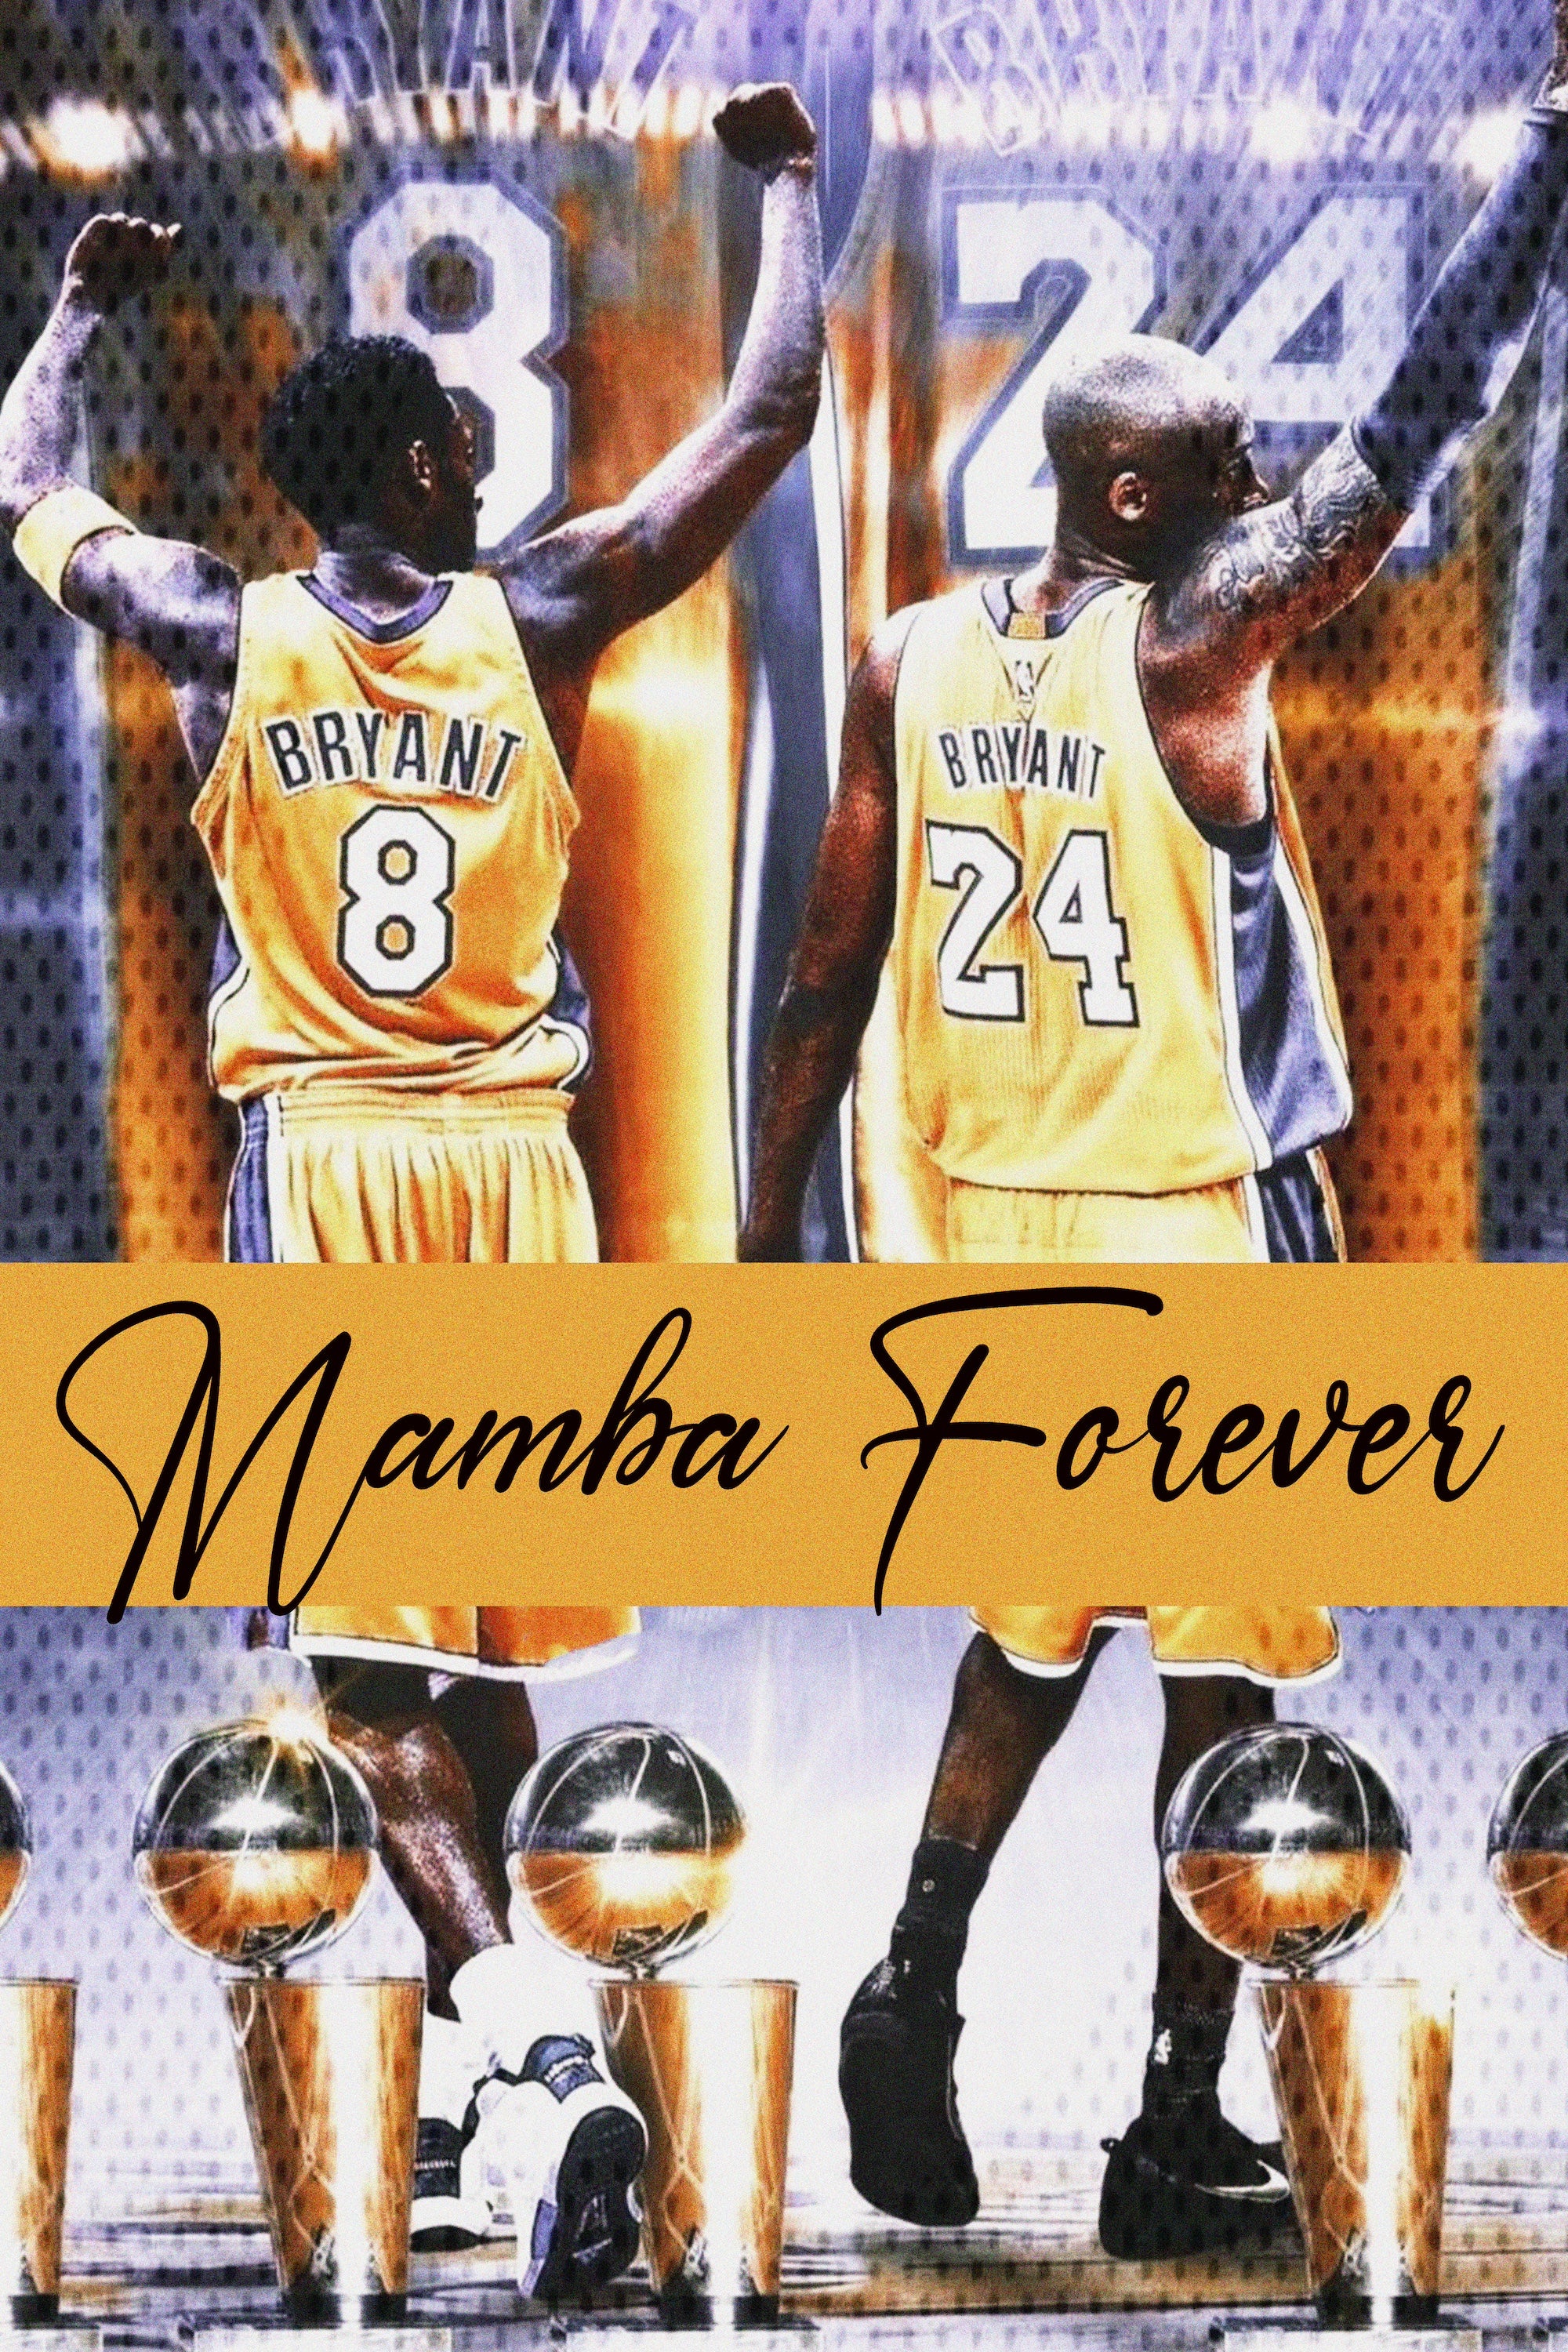 Kobe Bryant '8 and 24' Poster